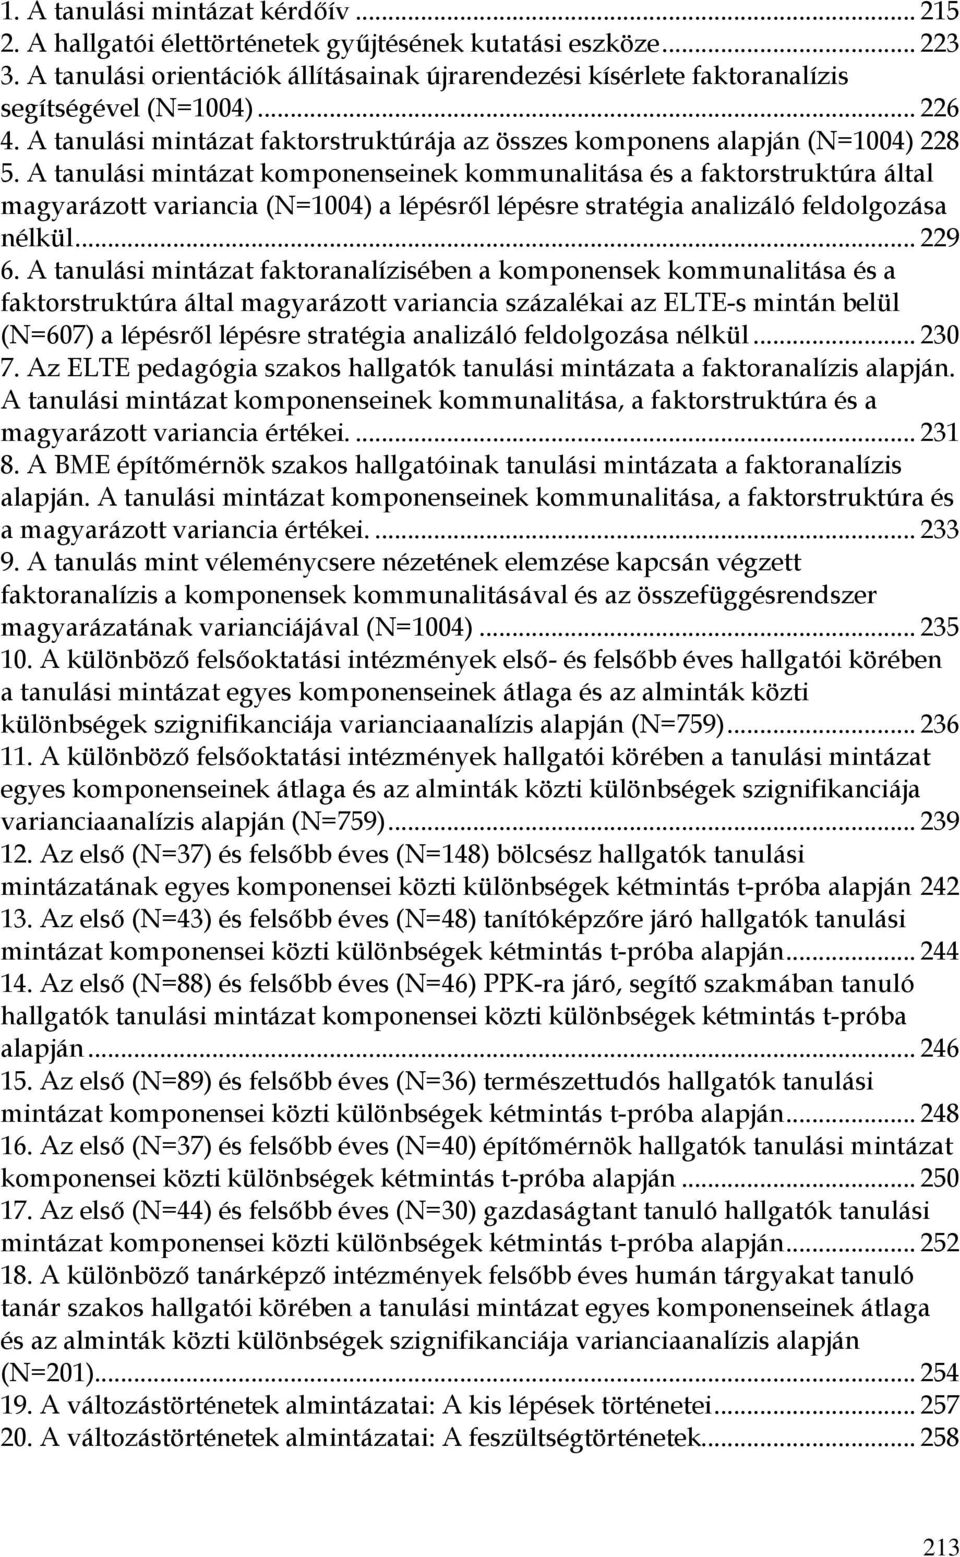 TANULÁSI STÍLUS KÉRDŐÍV - PDF Free Download